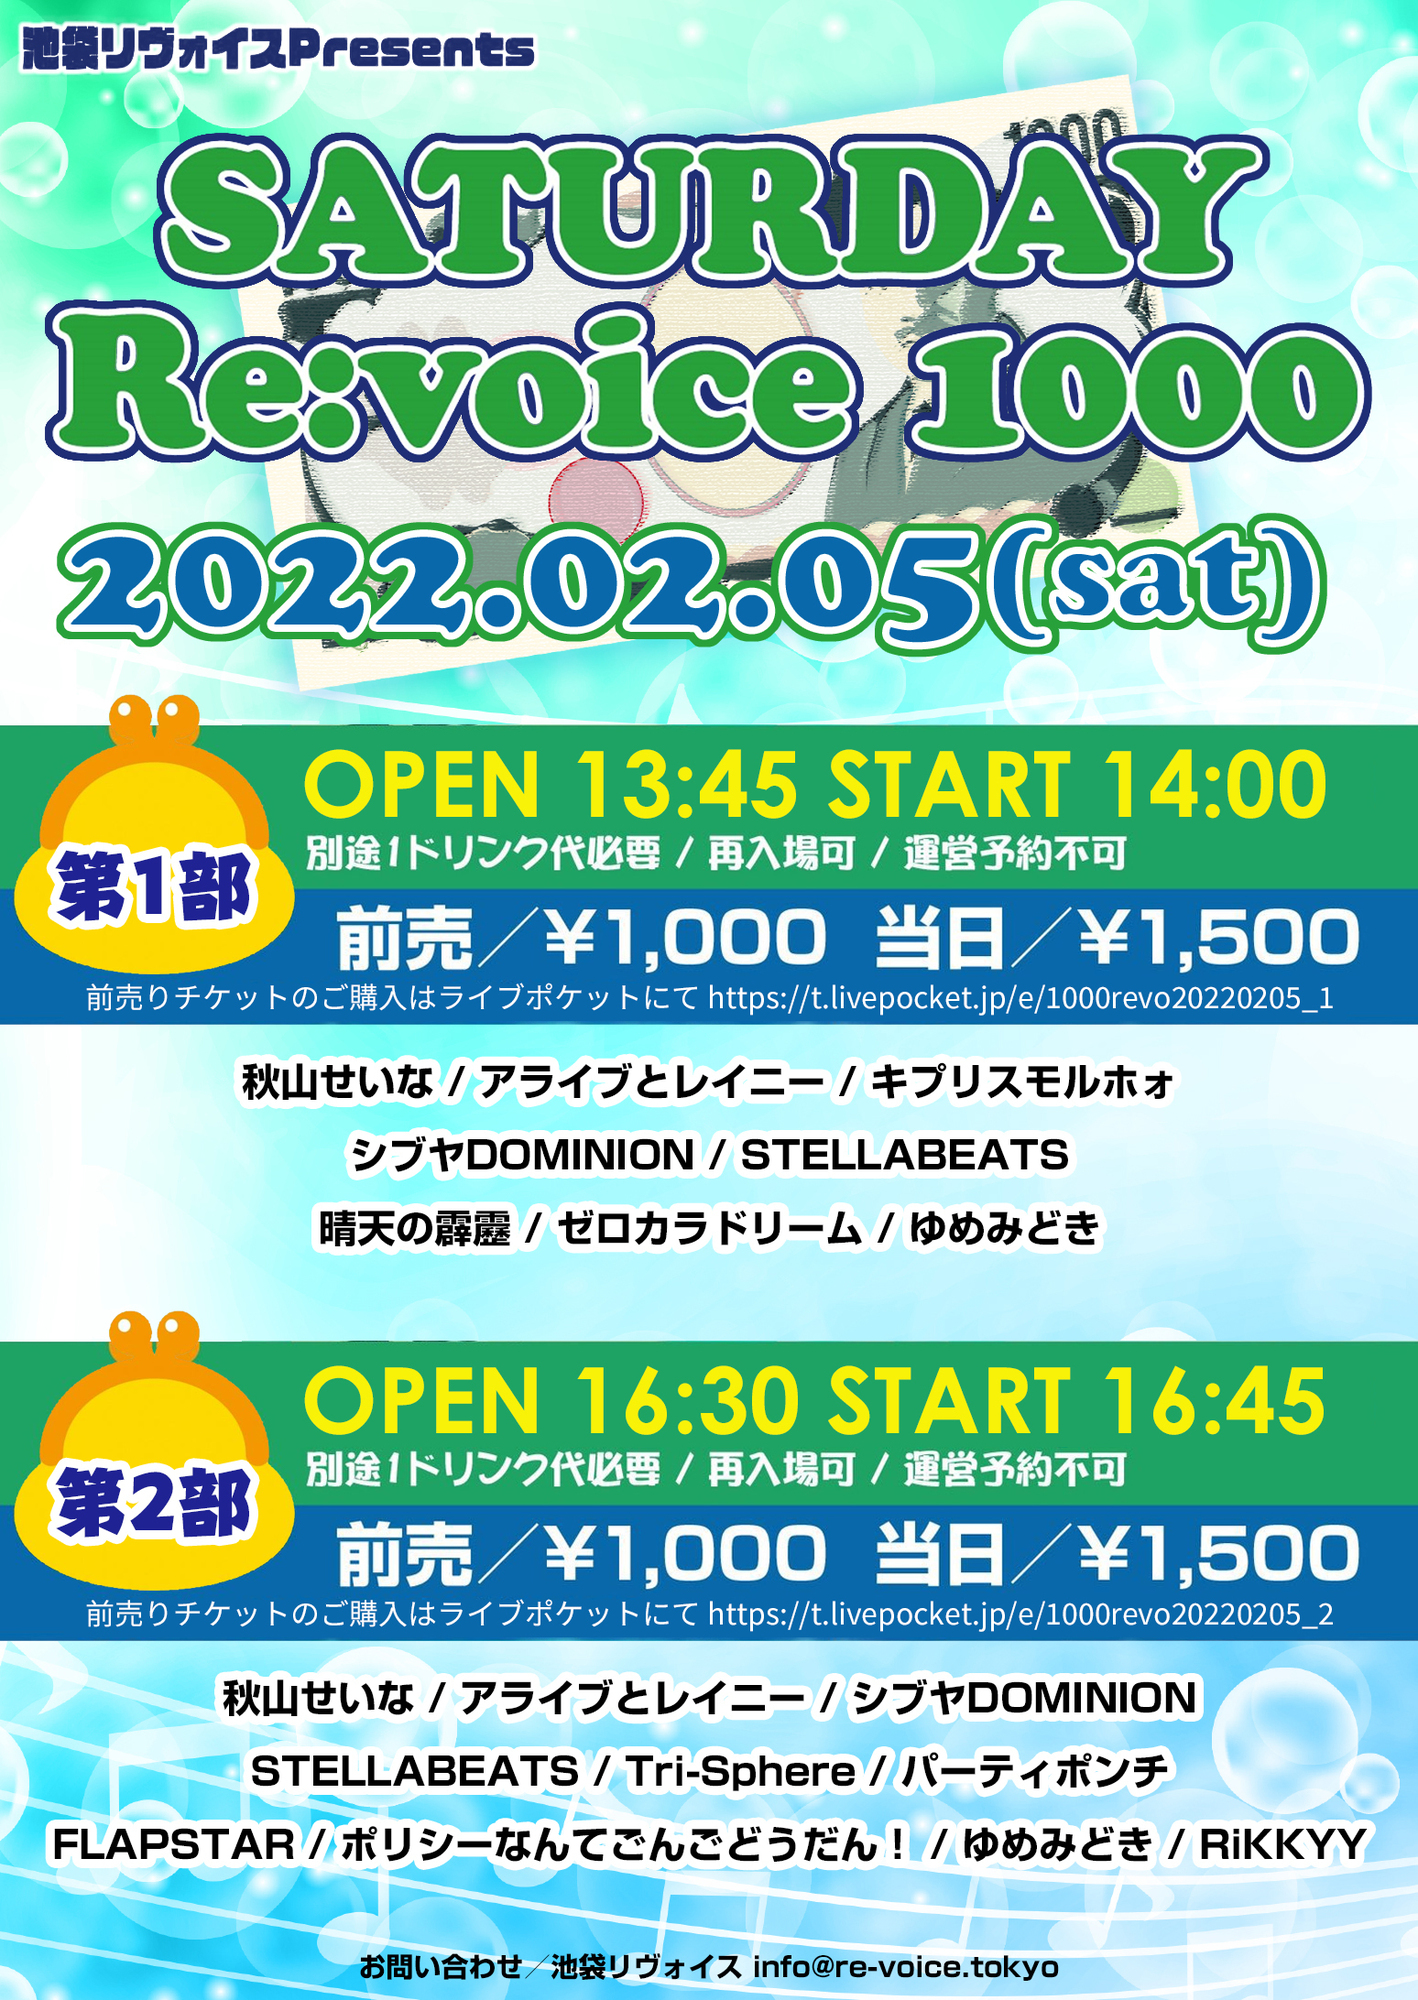 SATURDAY Re:voice 1000(02/05)